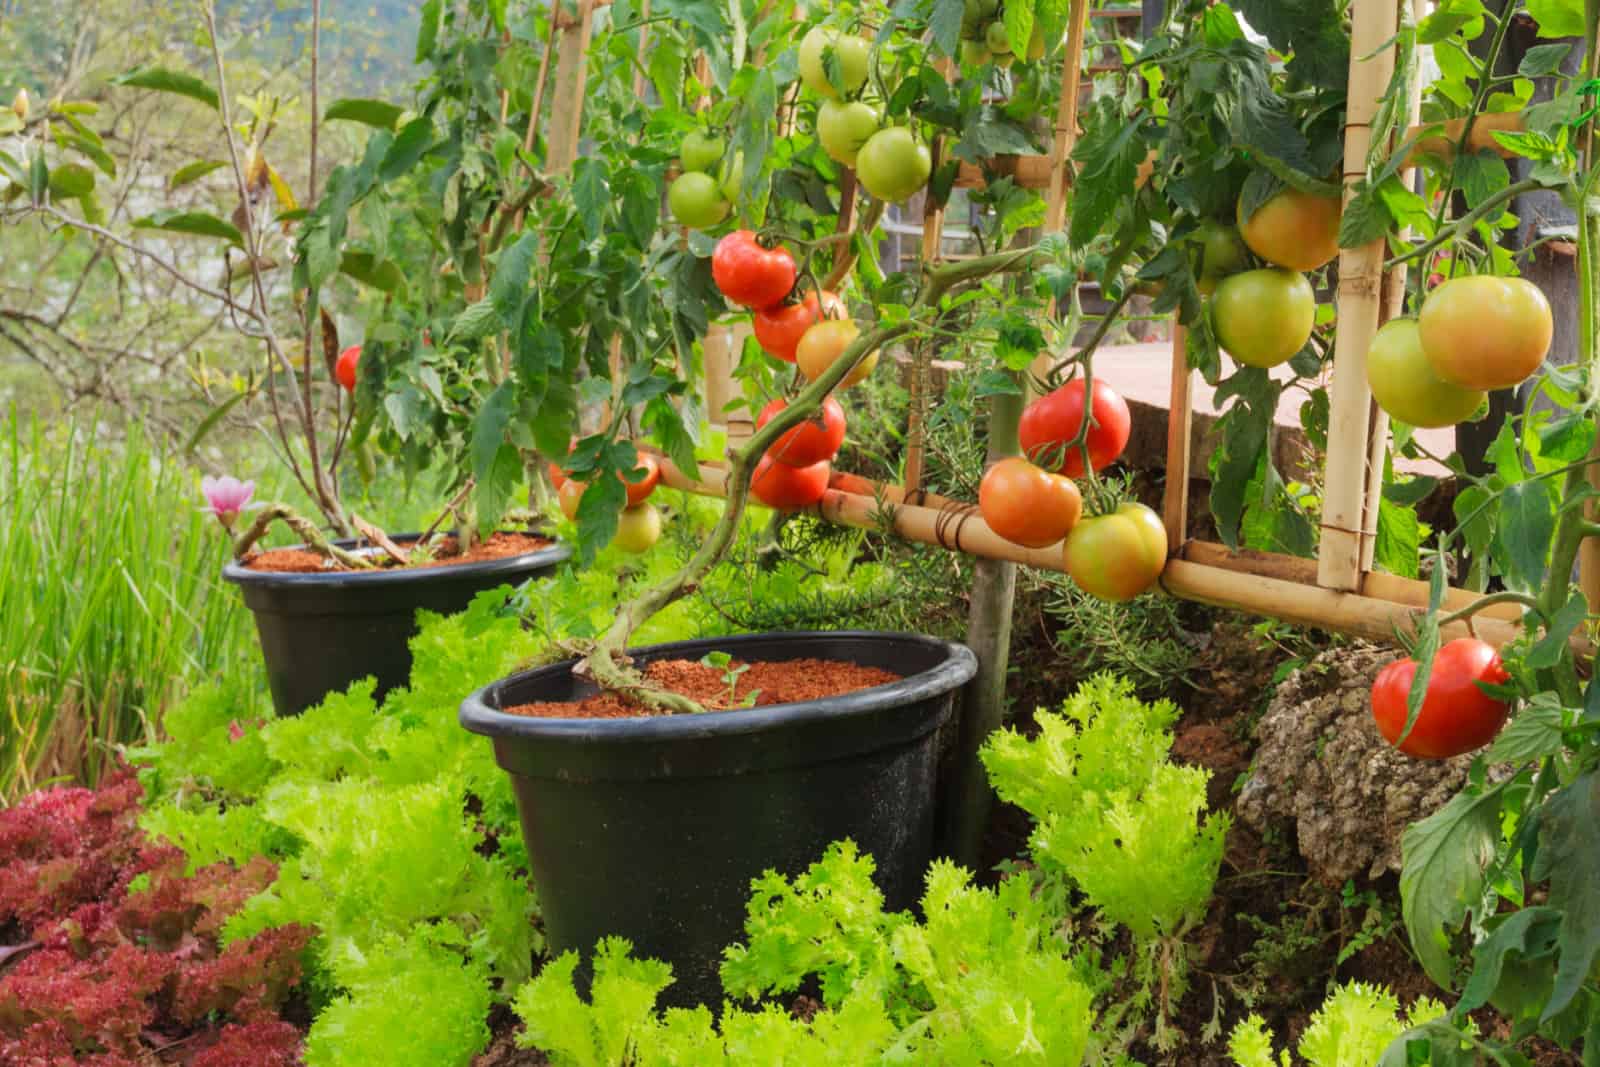 Fresh Tomato and Lettuce in Nontoxic Vegetable Garden.